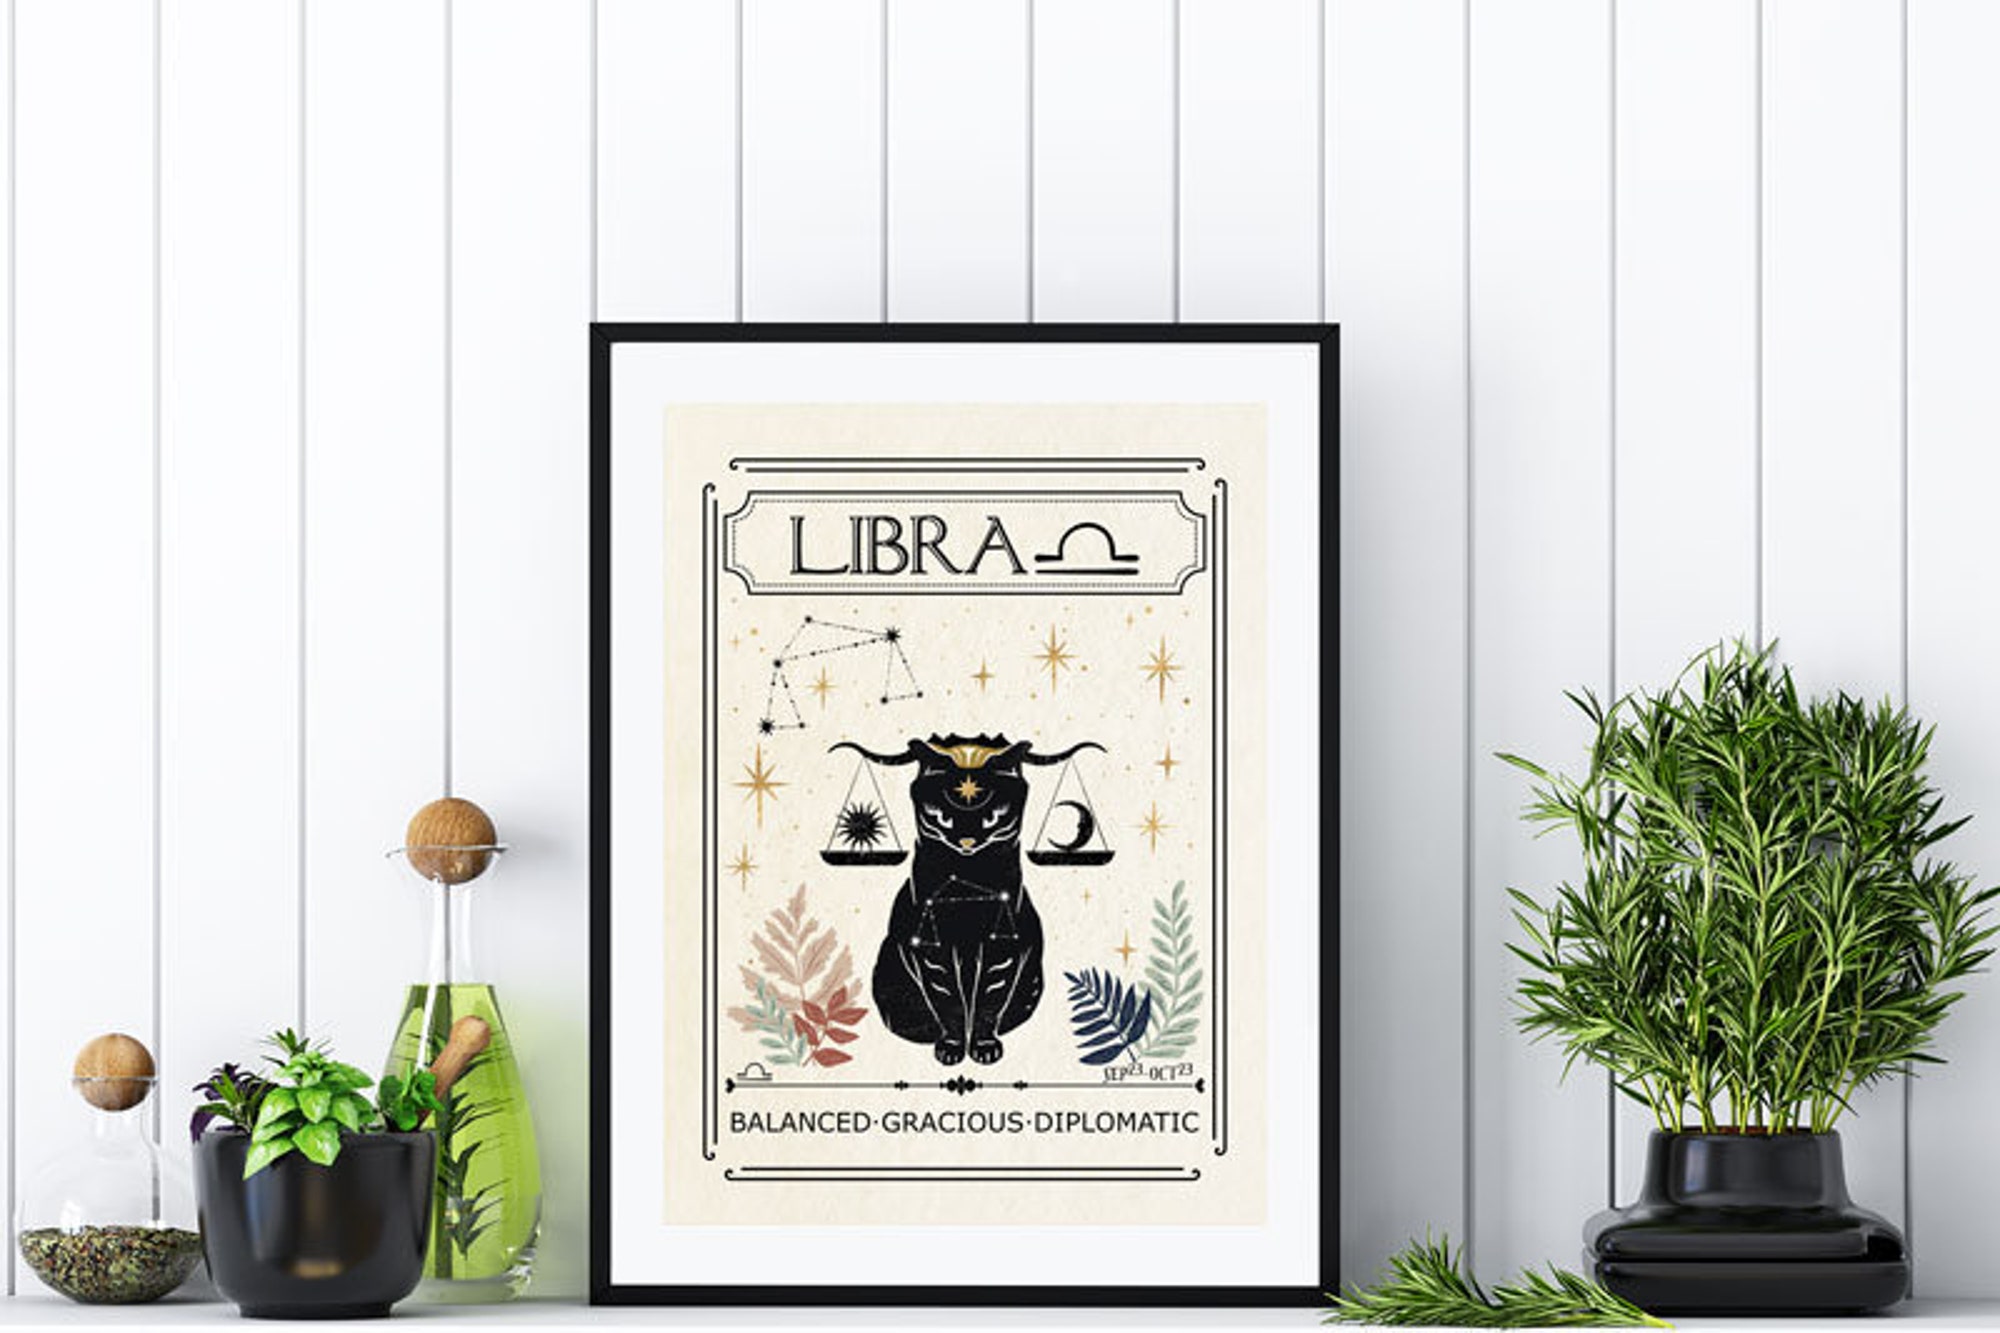 Zodiac Libra Print, Astrology, Star Sign, Boho Decor, Celestial Print, Mystical Art